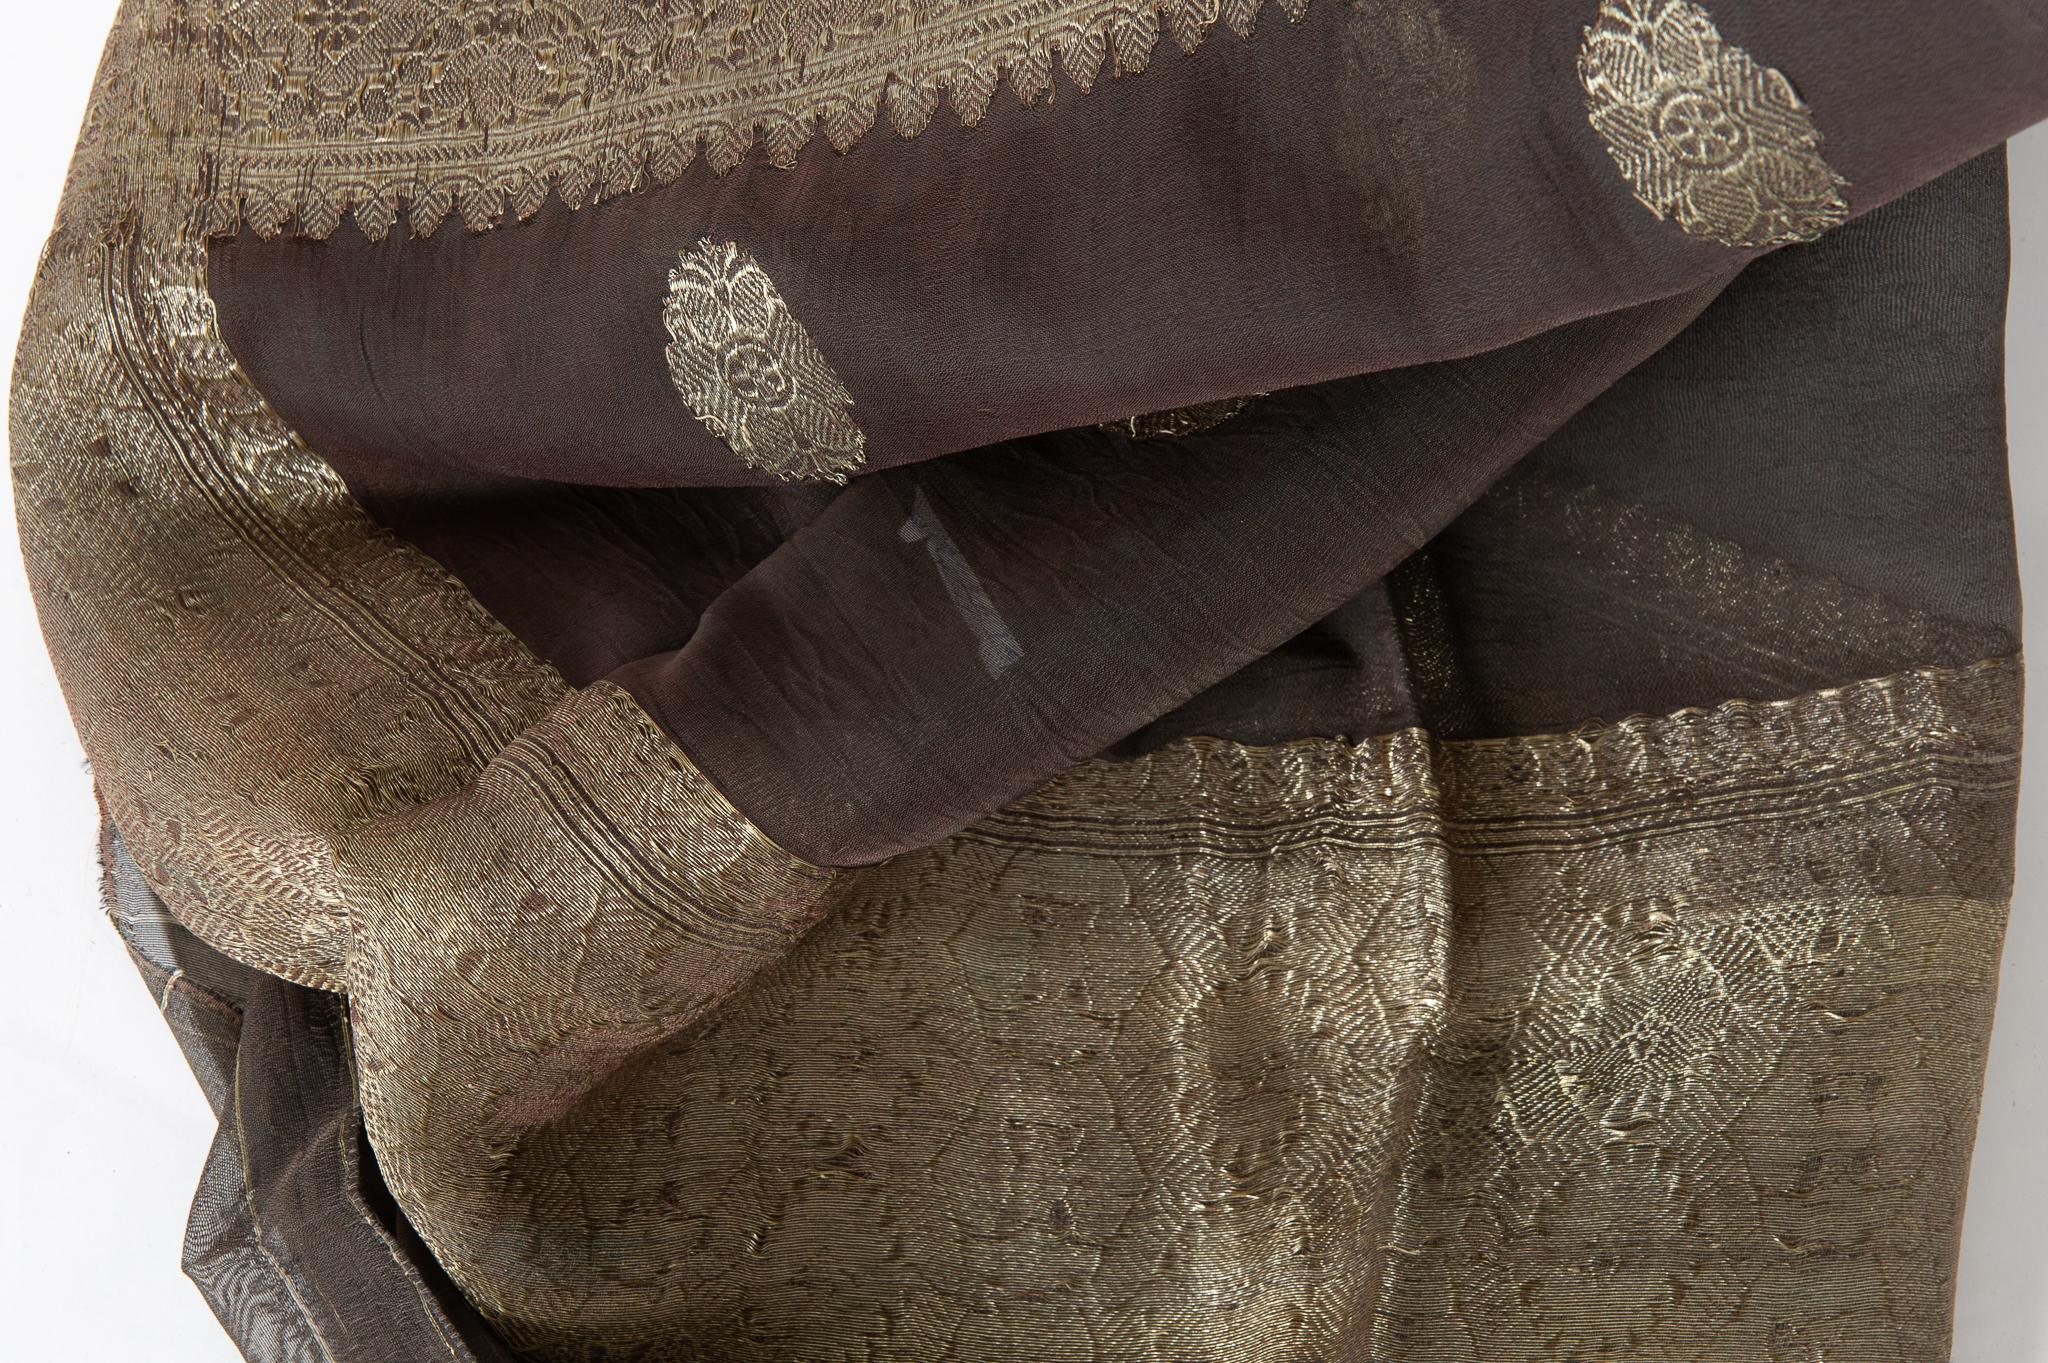 Vintage Indian Sari Dark Brown Color, Unusual Curtains or an Evening Dress 6